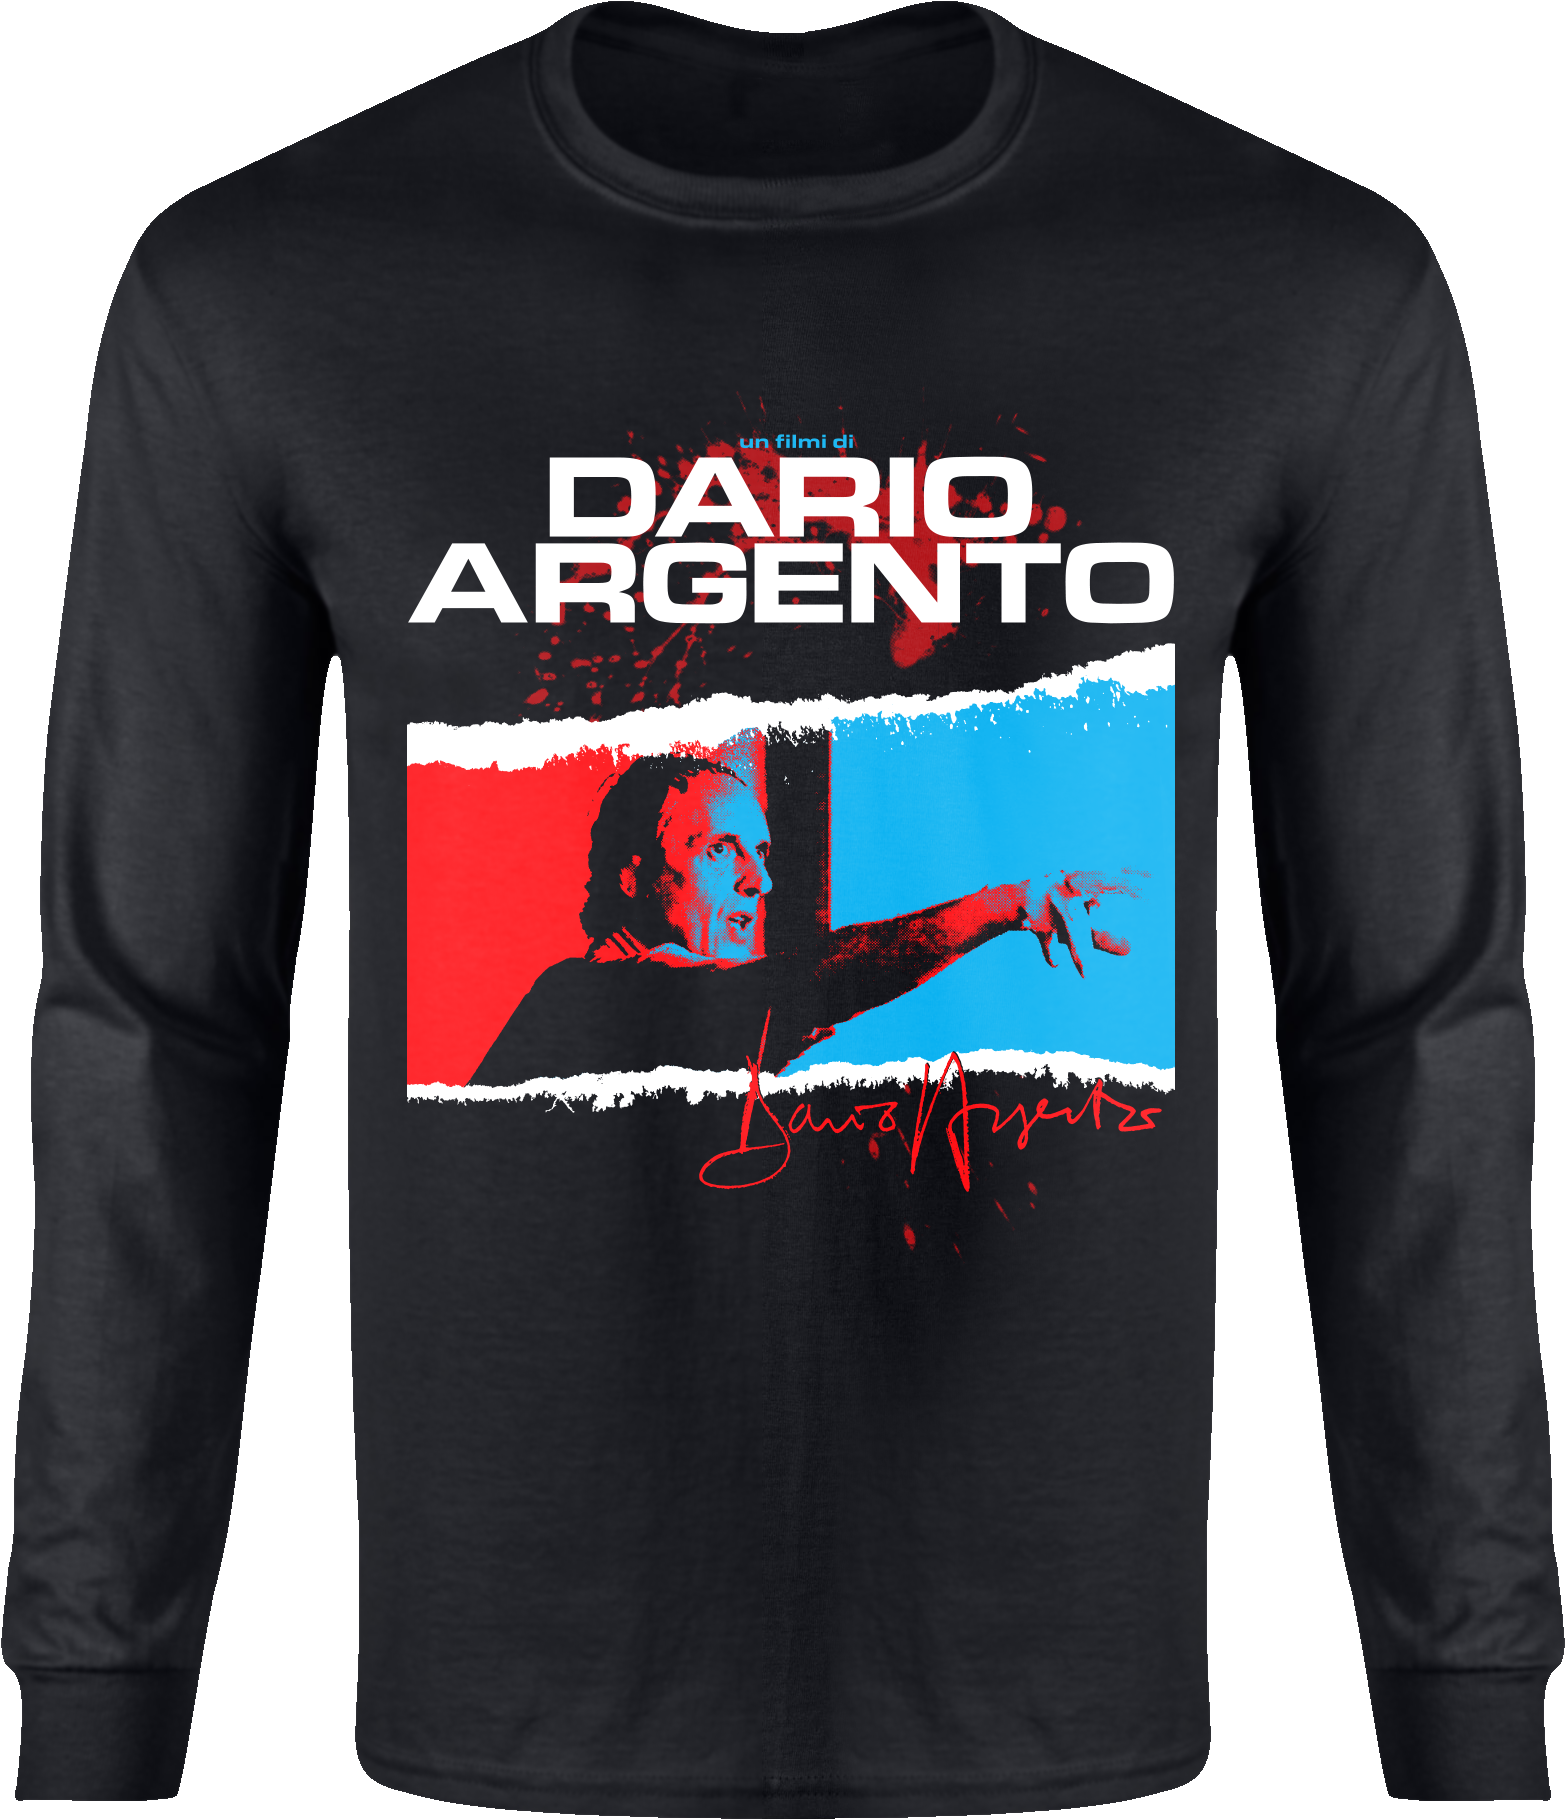 DARIO ARGENTO: "DARIO TORN" LONG SLEEVE T-SHIRT